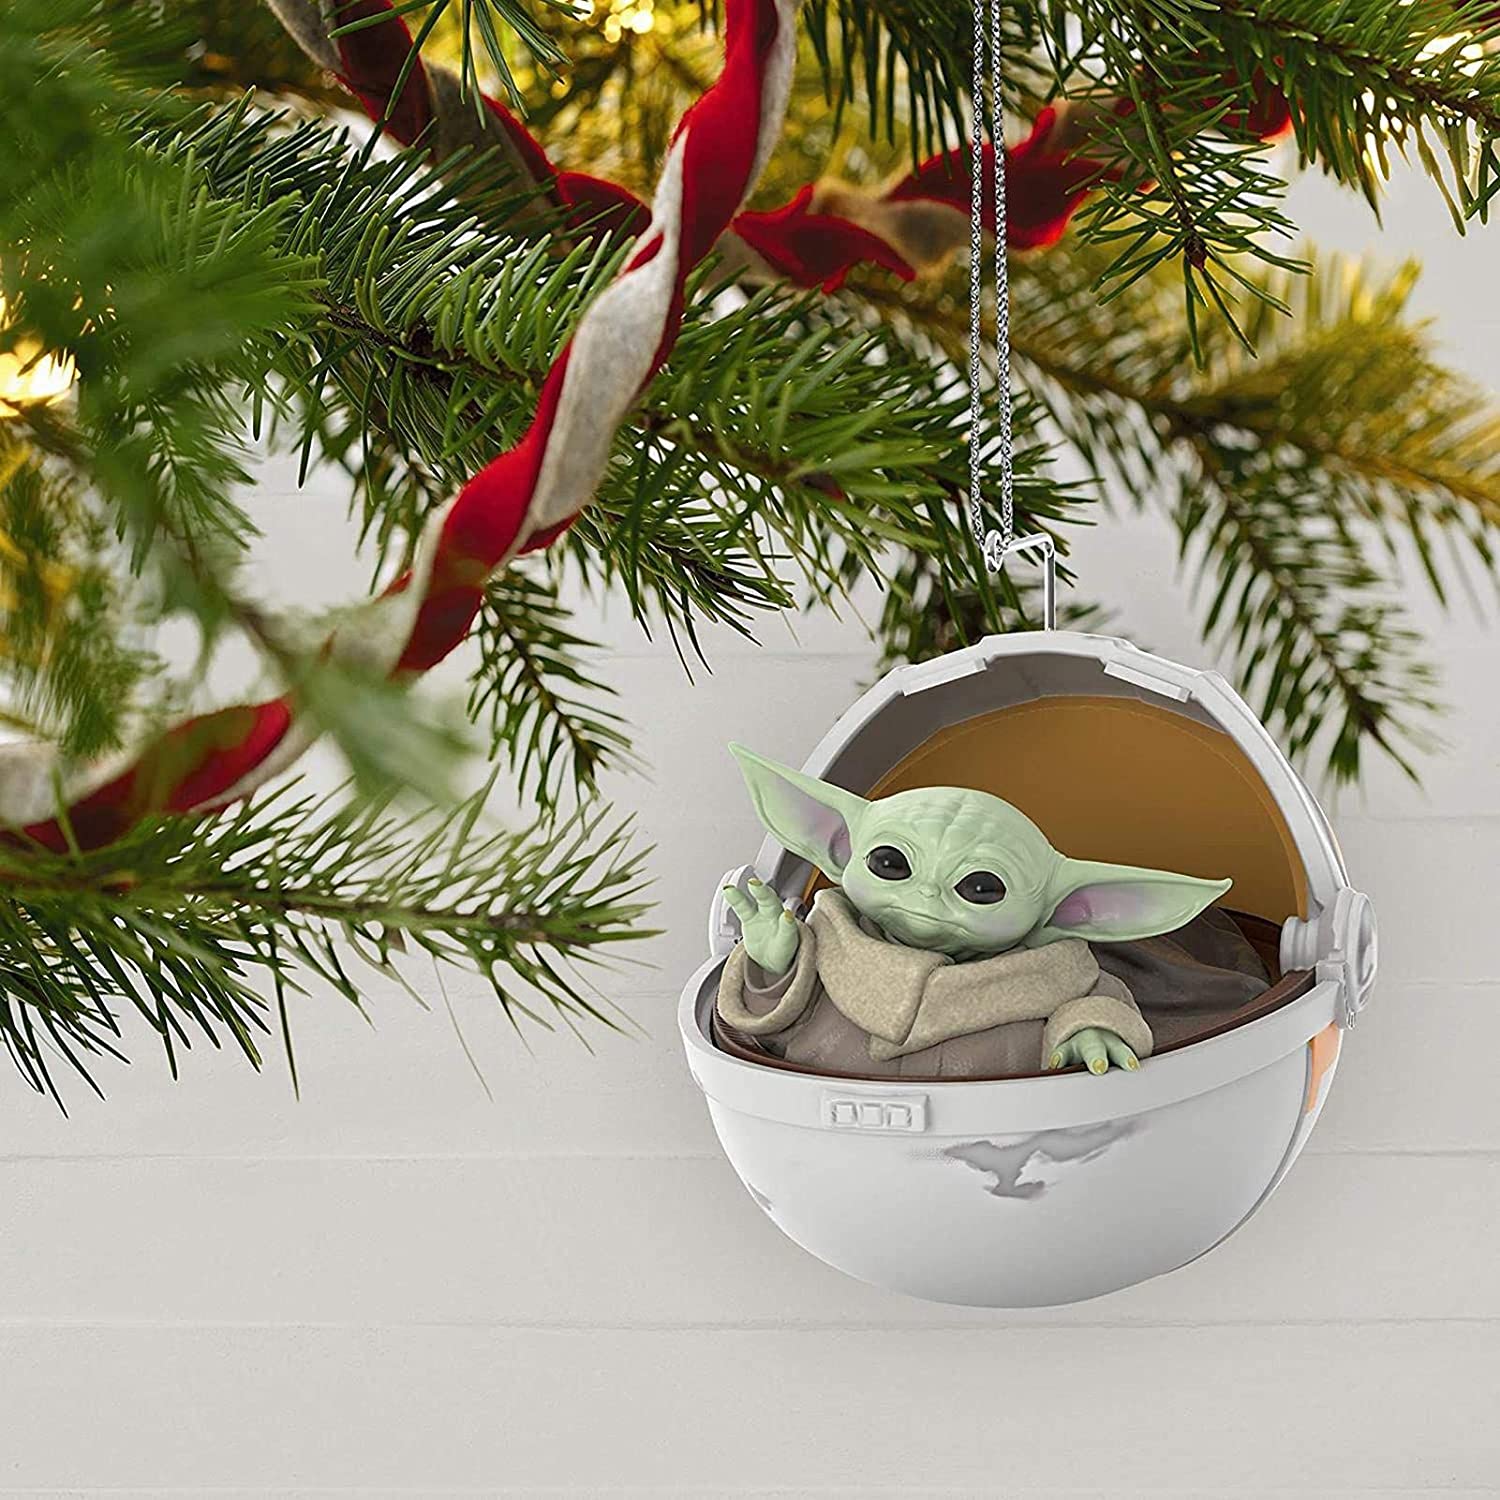 Baby Yoda from The Mandalorian Doll Christmas Ornament